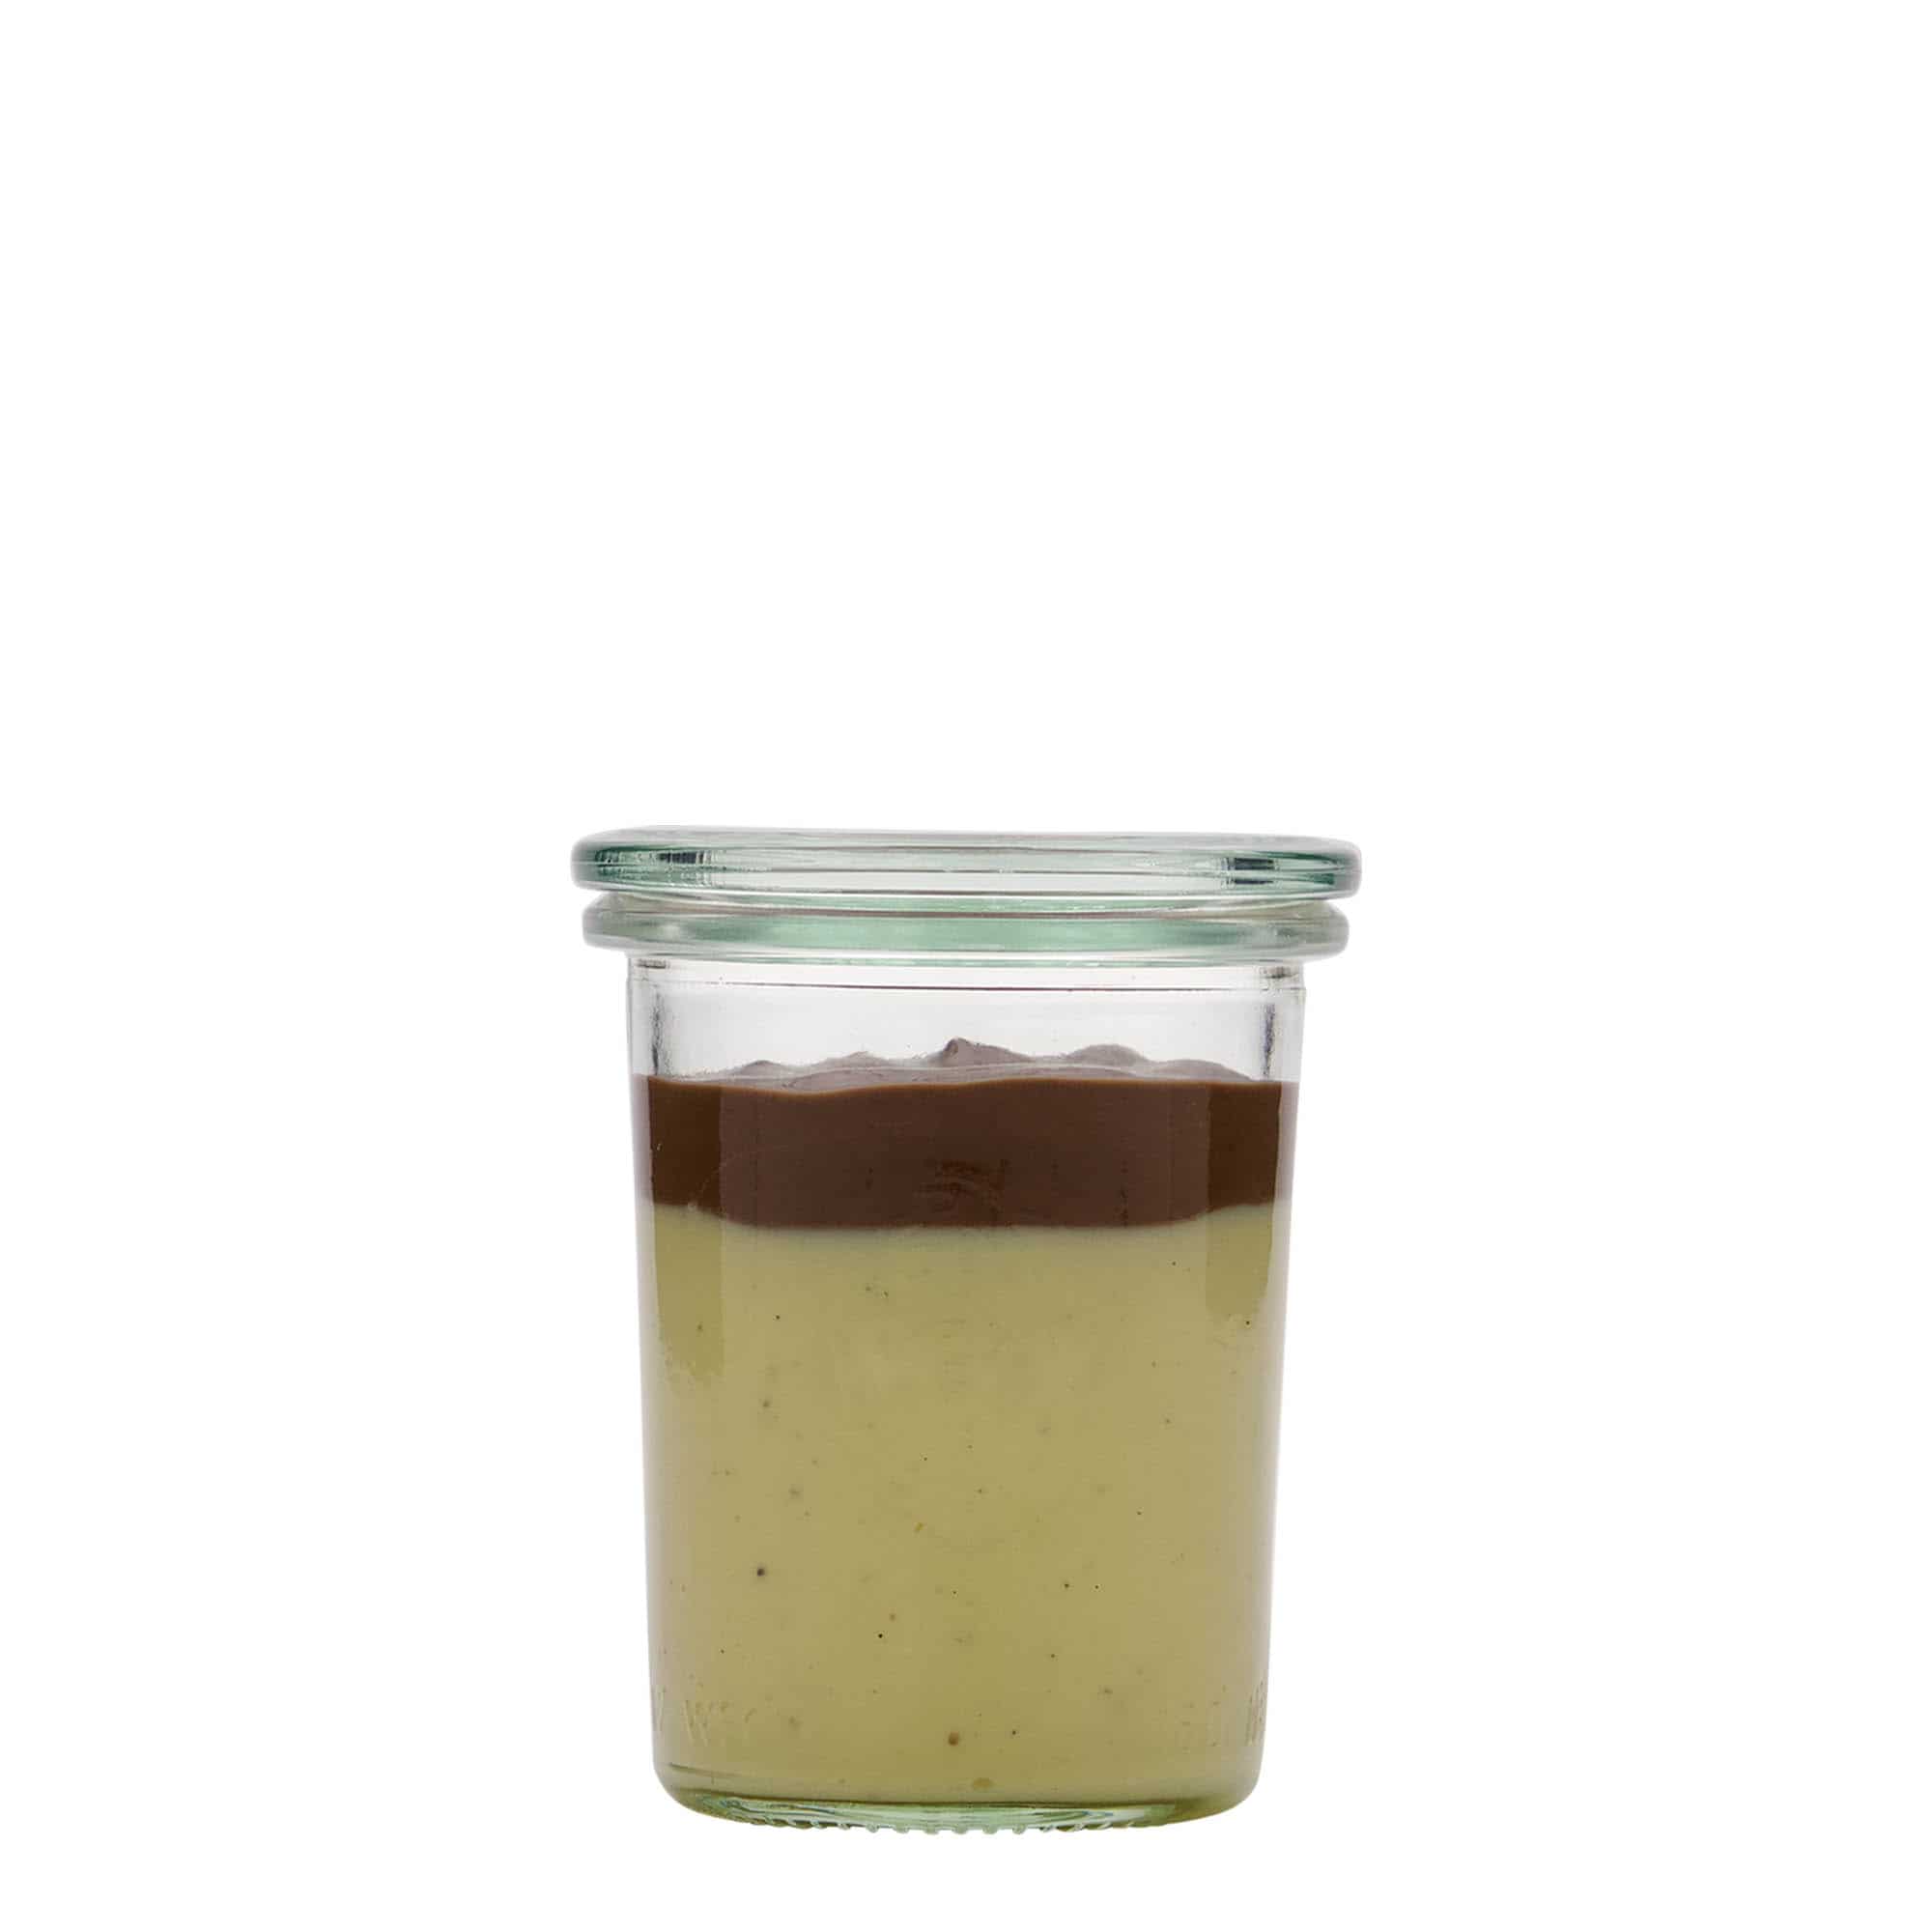 160 ml WECK cylindrical jar, closure: round rim